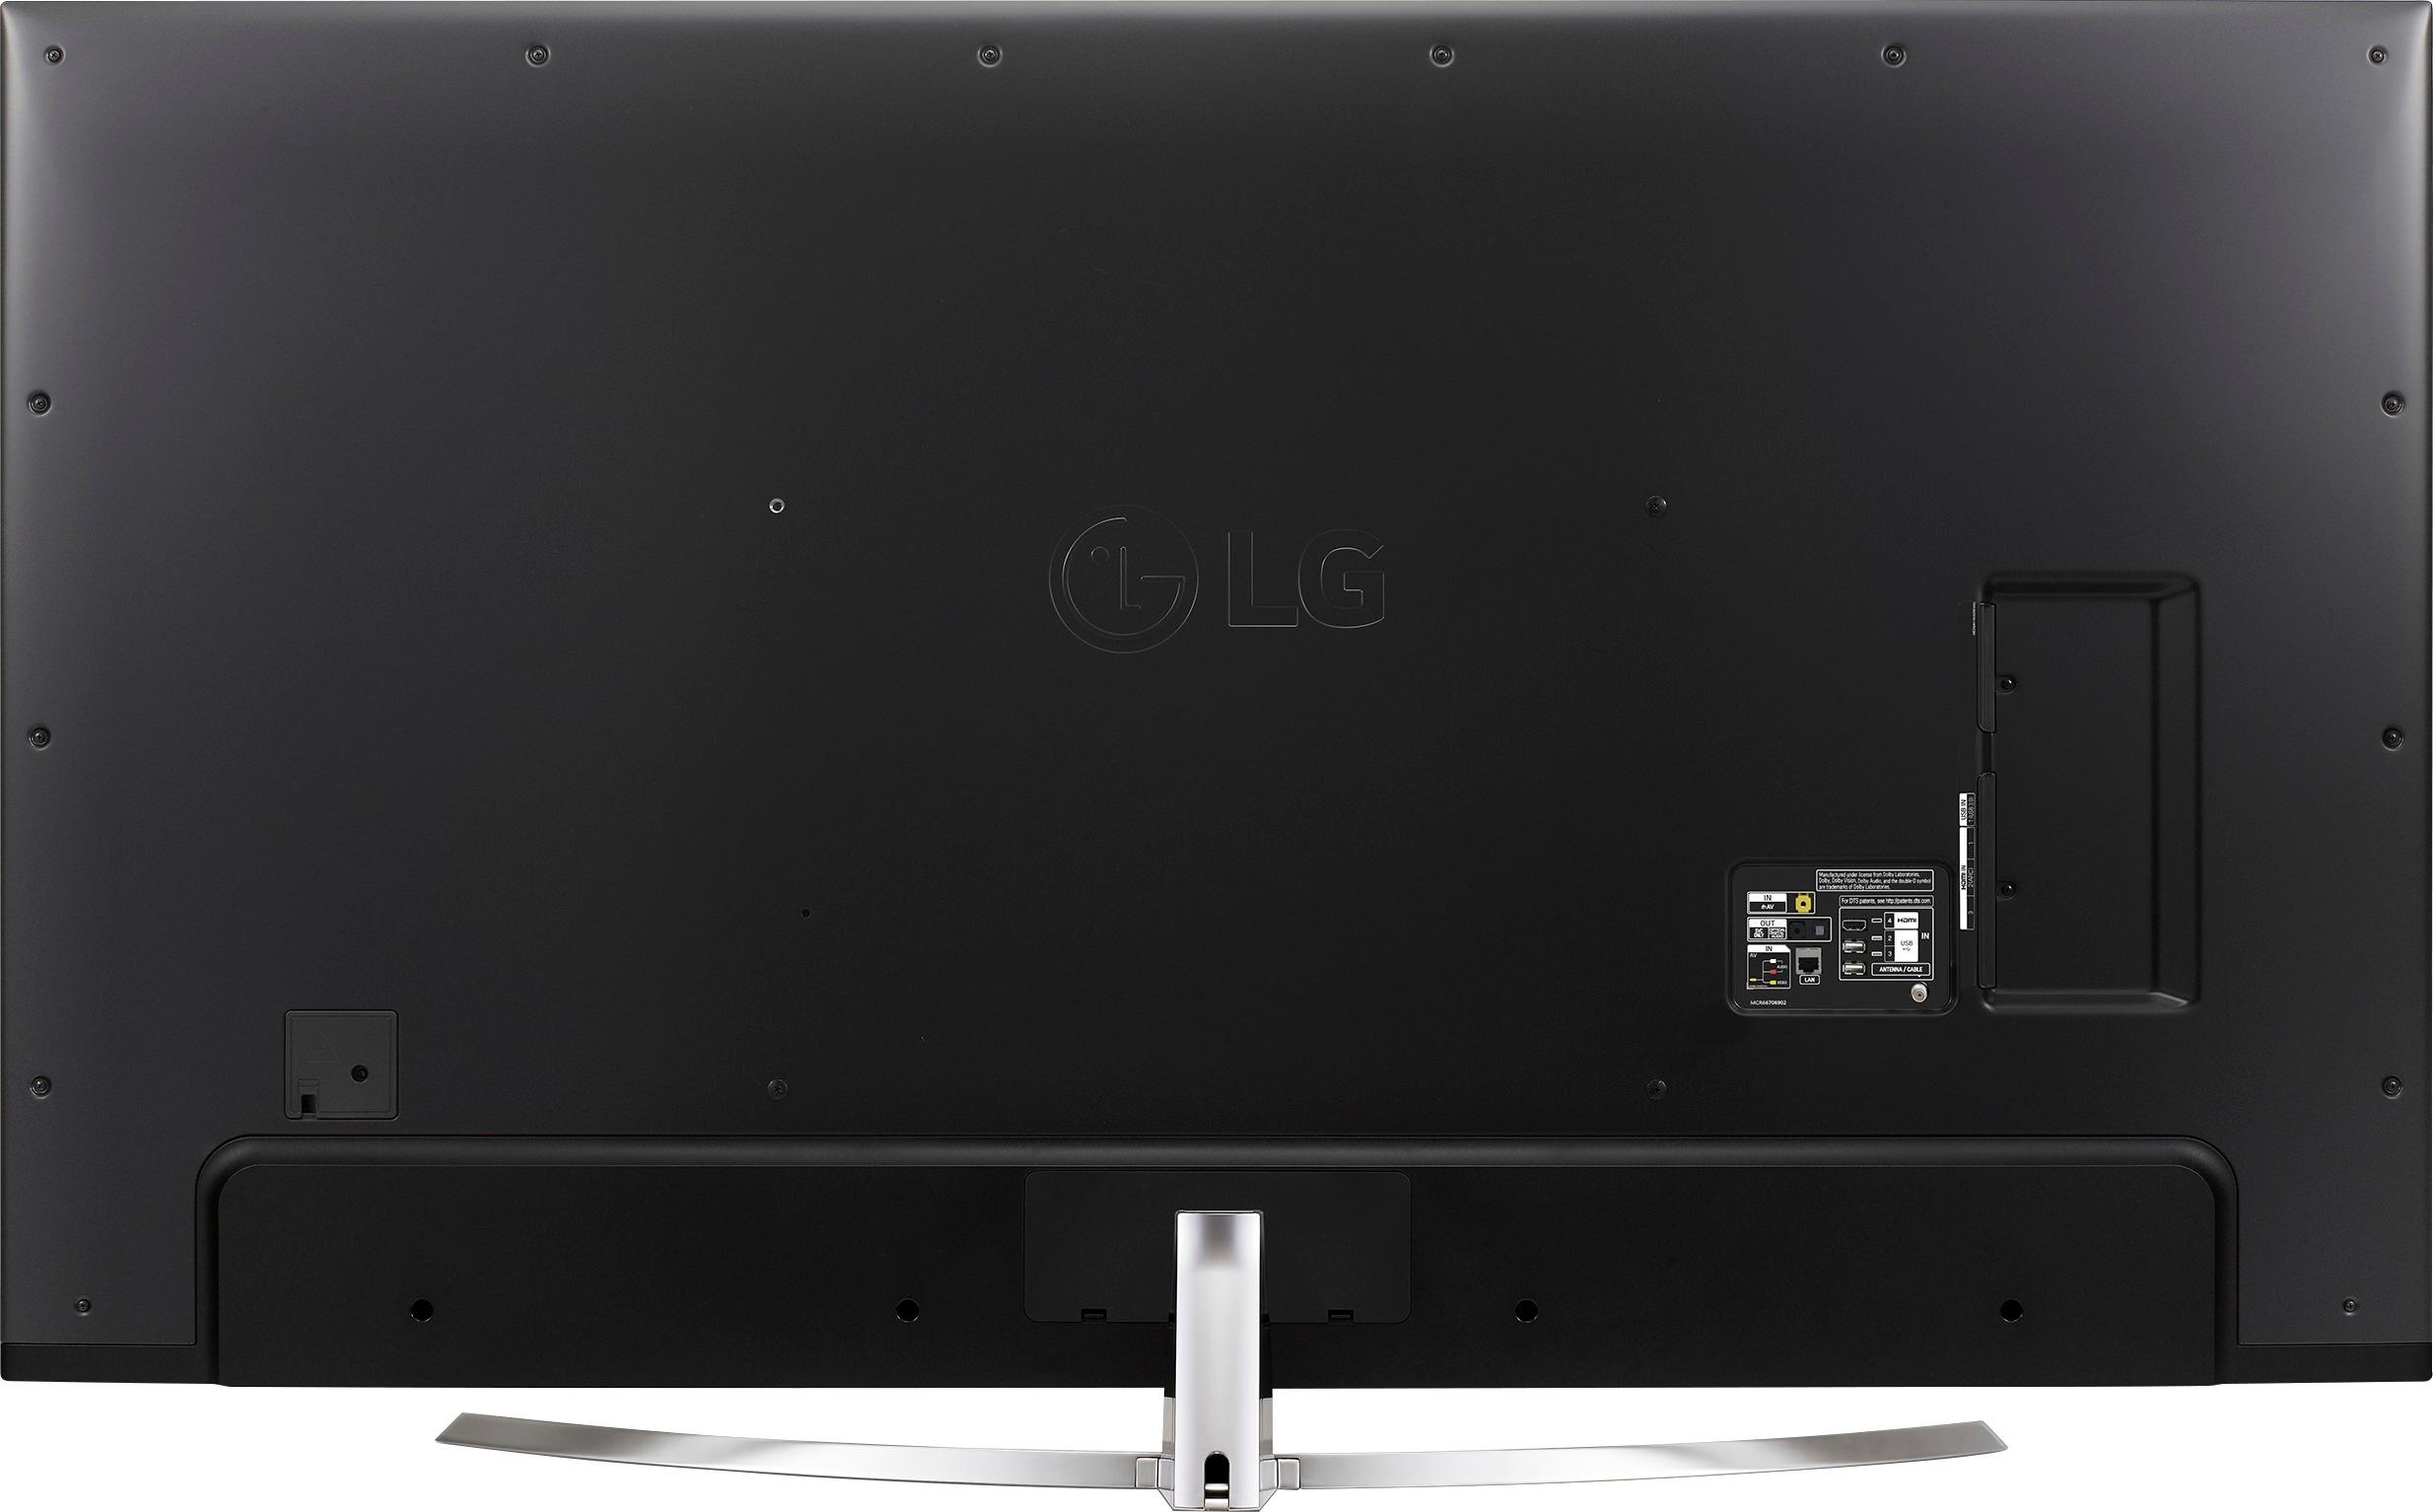 LG 75 Class - UN8570 Series - 4K UHD LED LCD TV